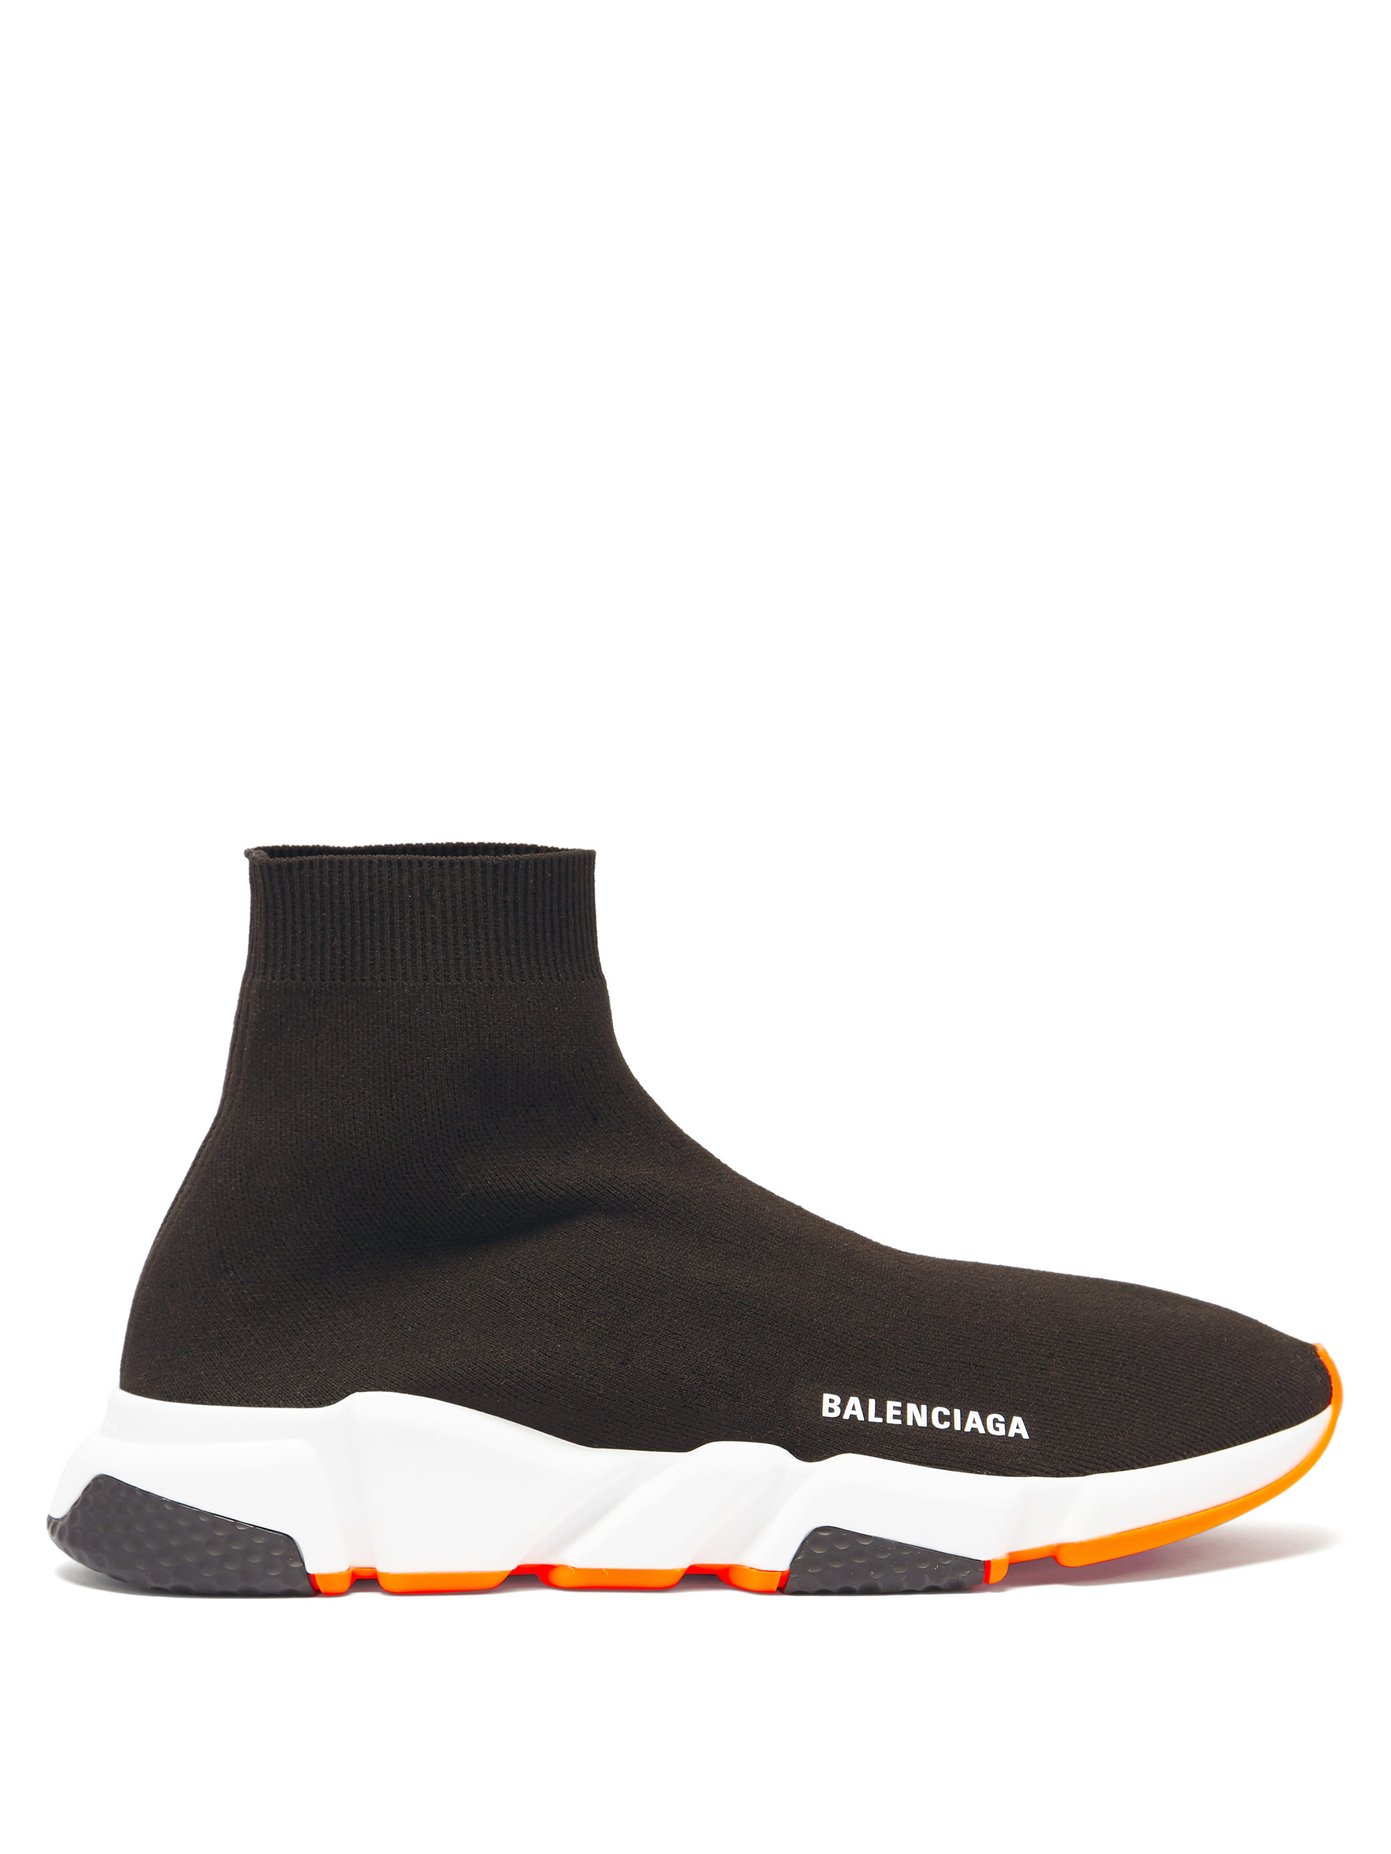 Speed sock trainers | Balenciaga 